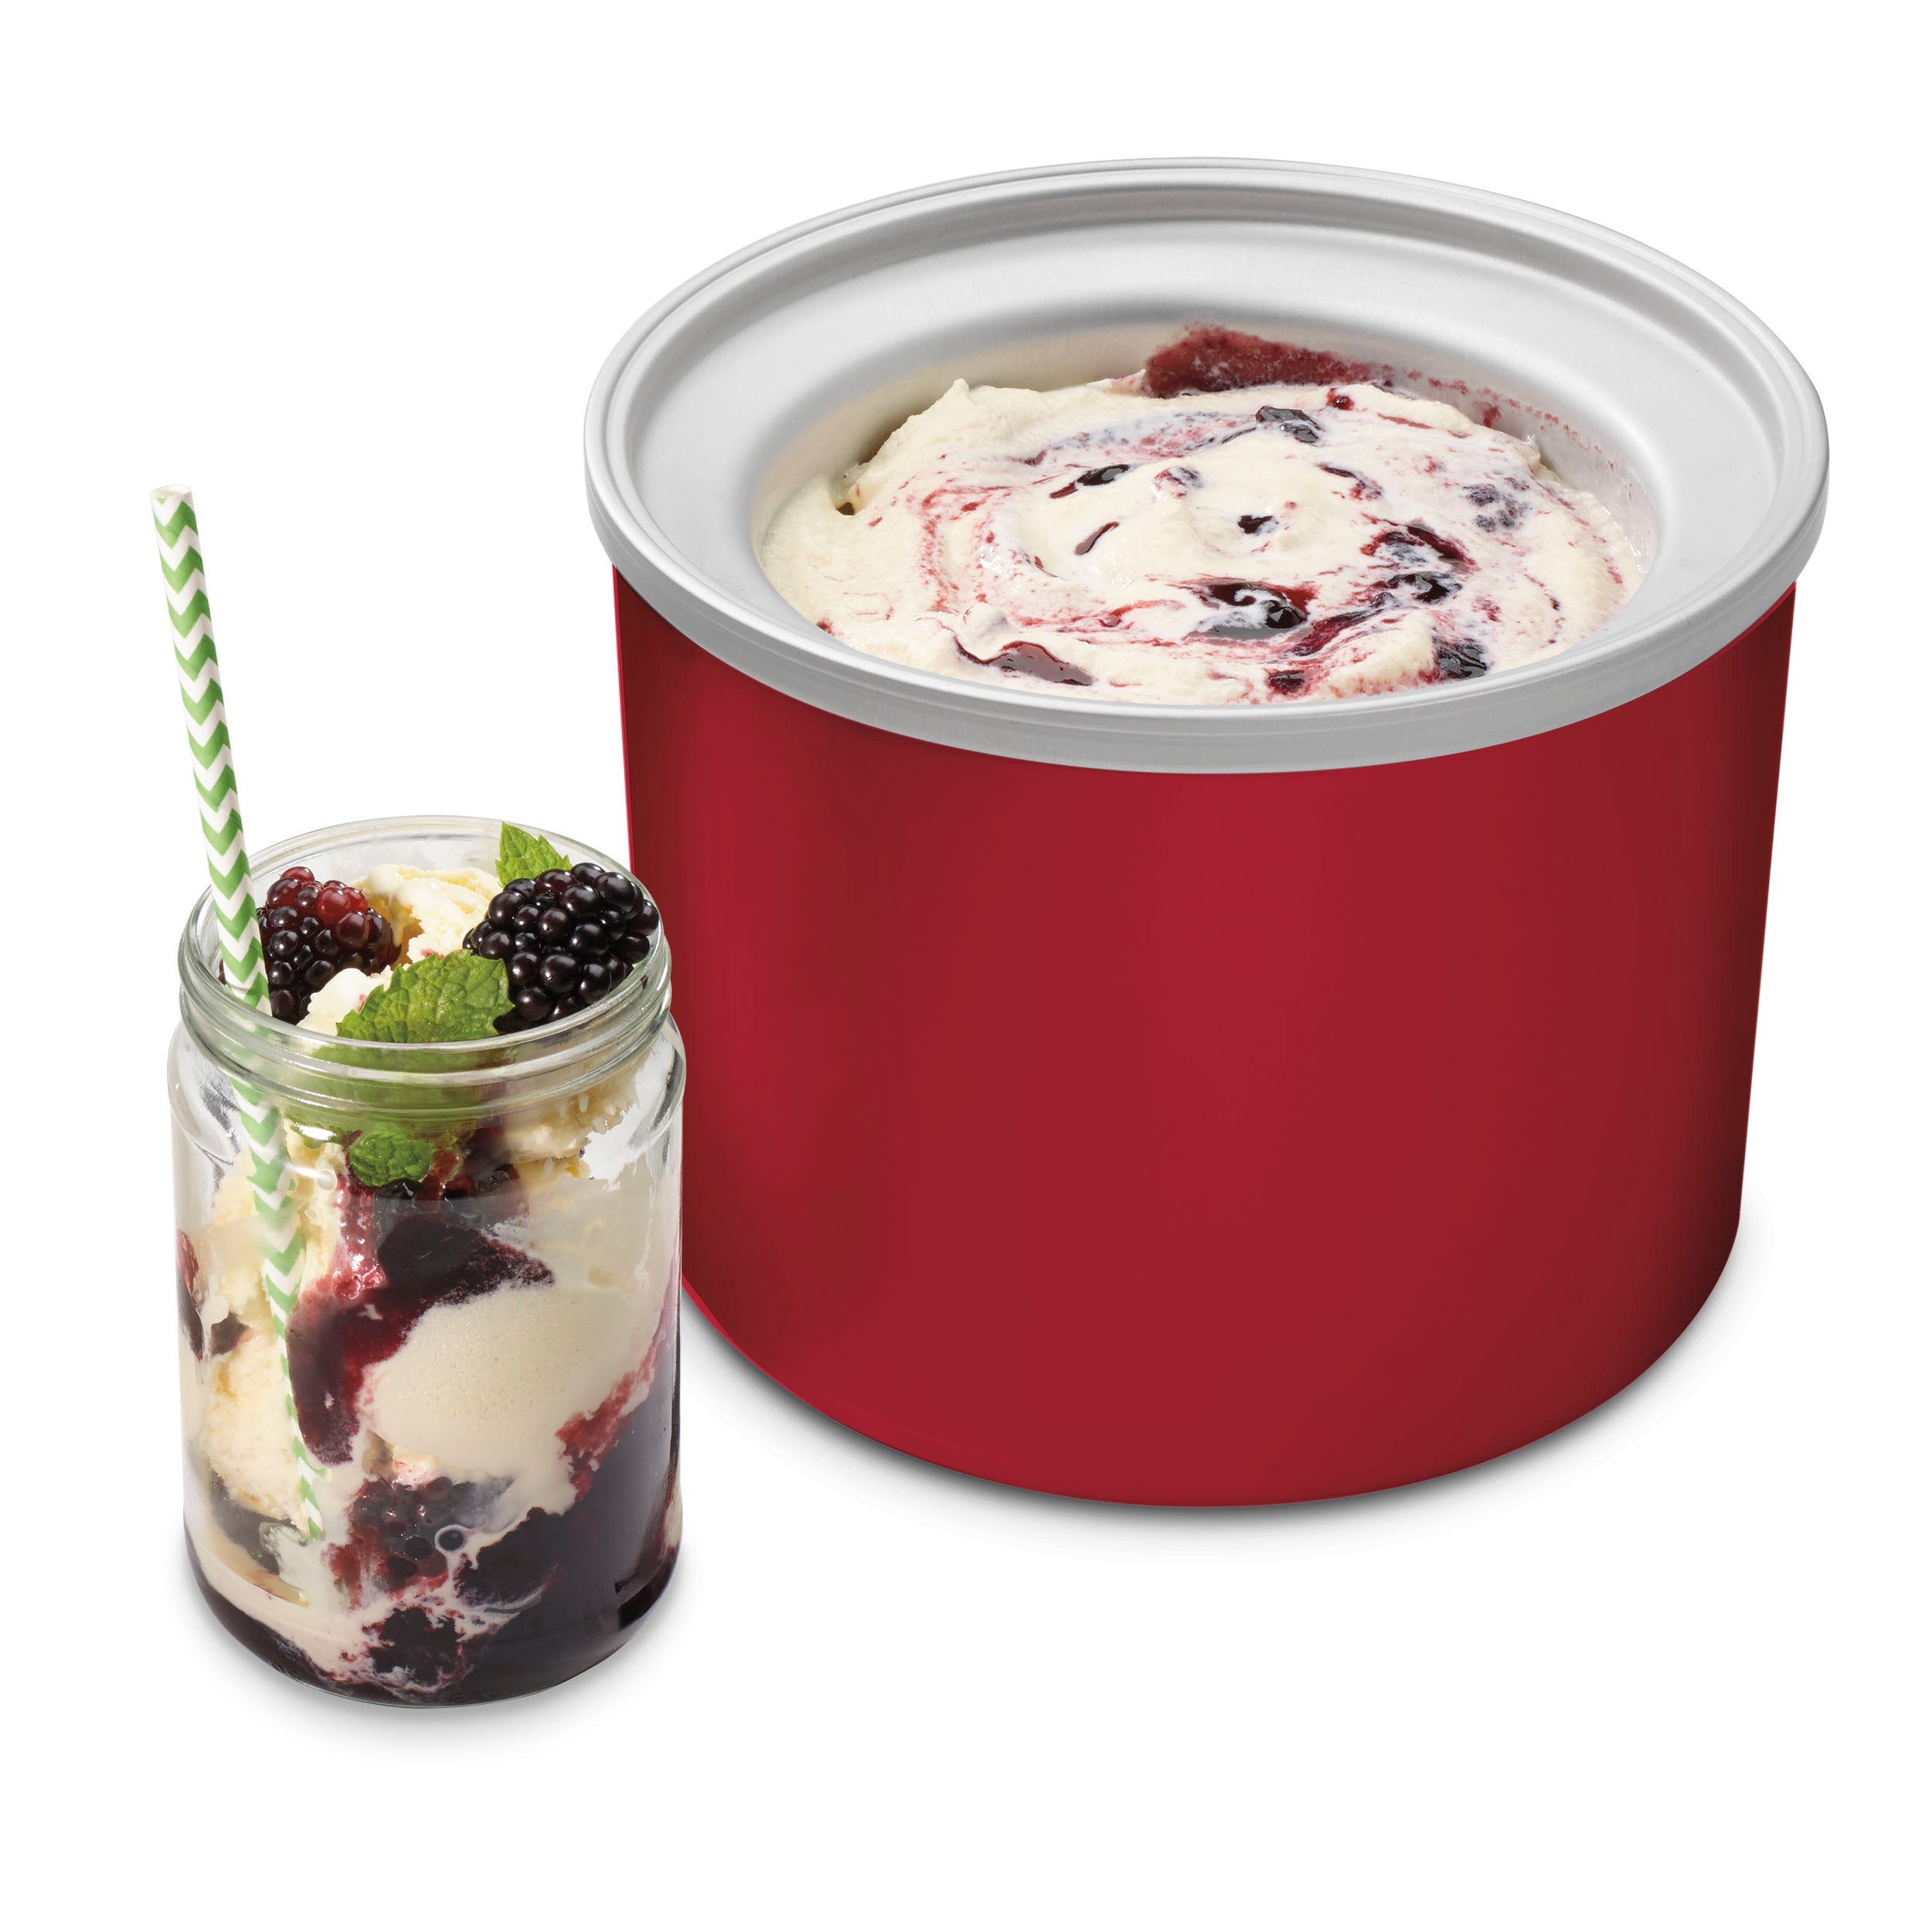 Cuisinart ICE-31RFR Ice Cream Maker Fruit Scoop Red - Certified Refurbished